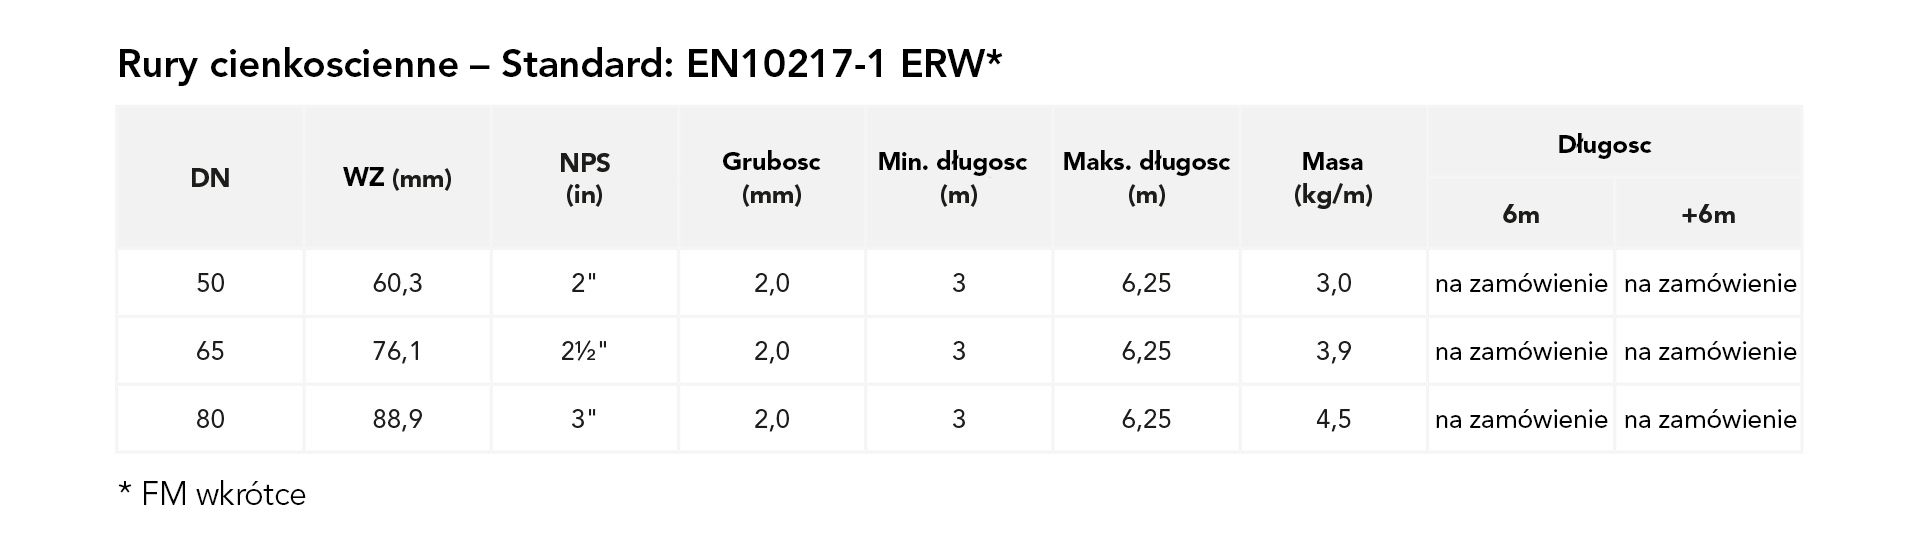 Rury cienkościenne – Standard: EN10217-1 ERW*